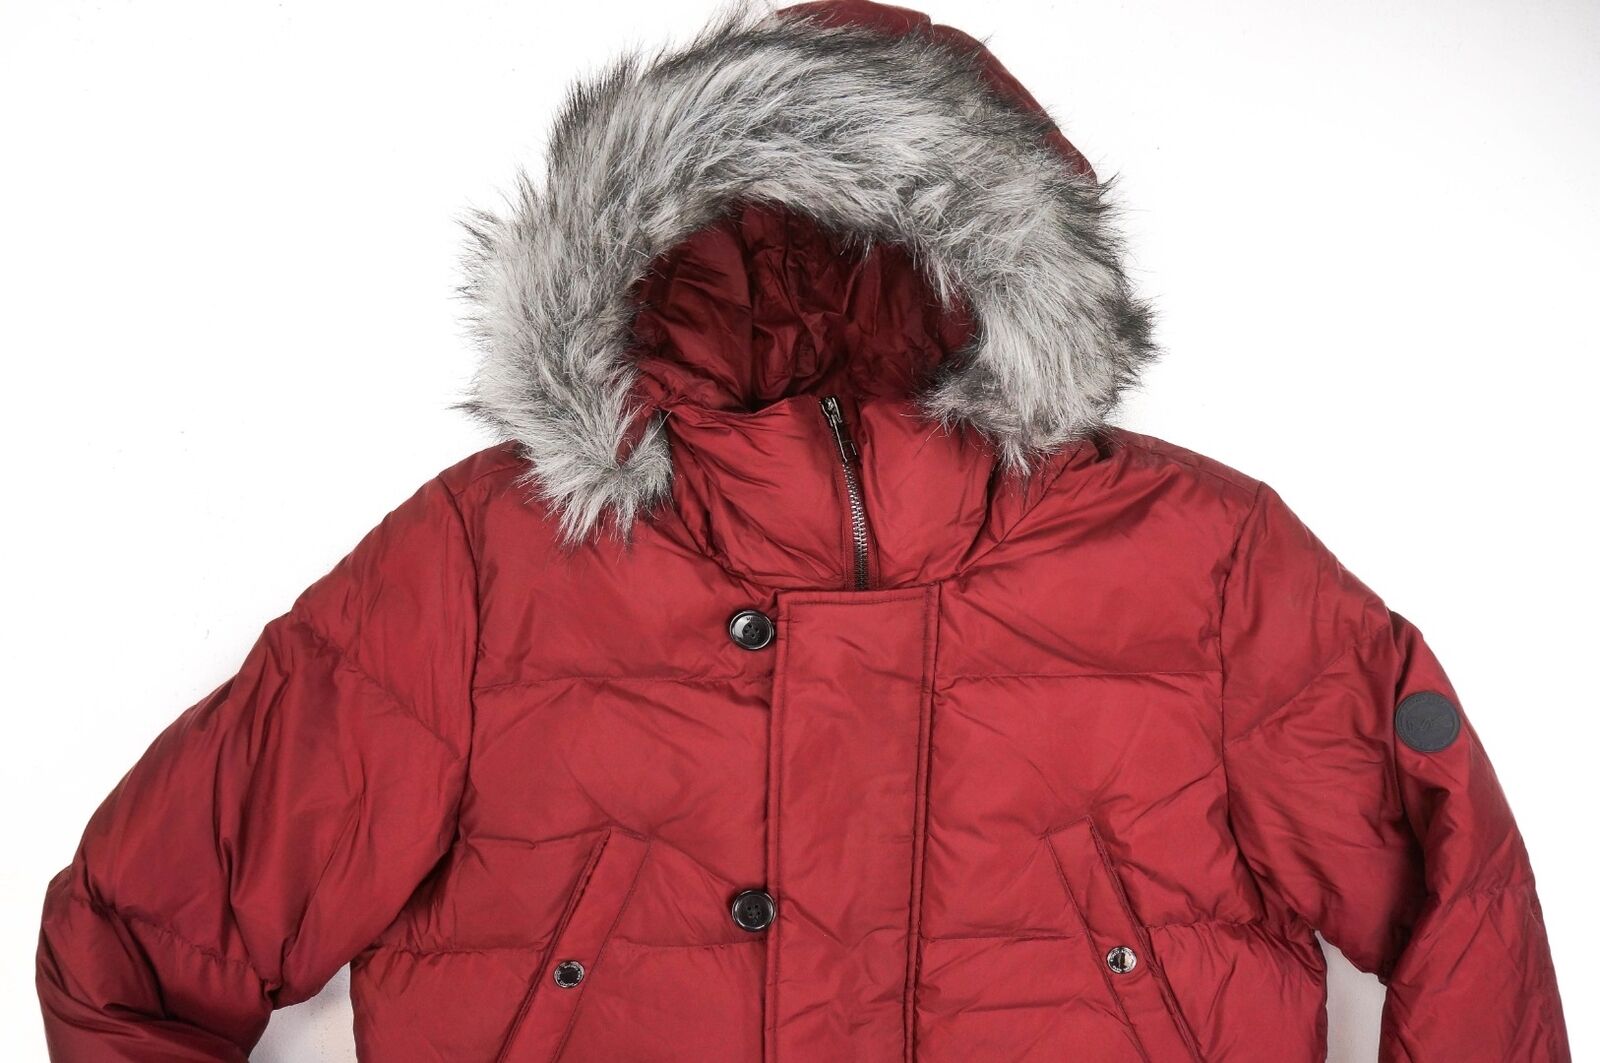 Michael Kors RED Faux Fur Trim Nylon Parka Coat, US Small - image 5 of 6